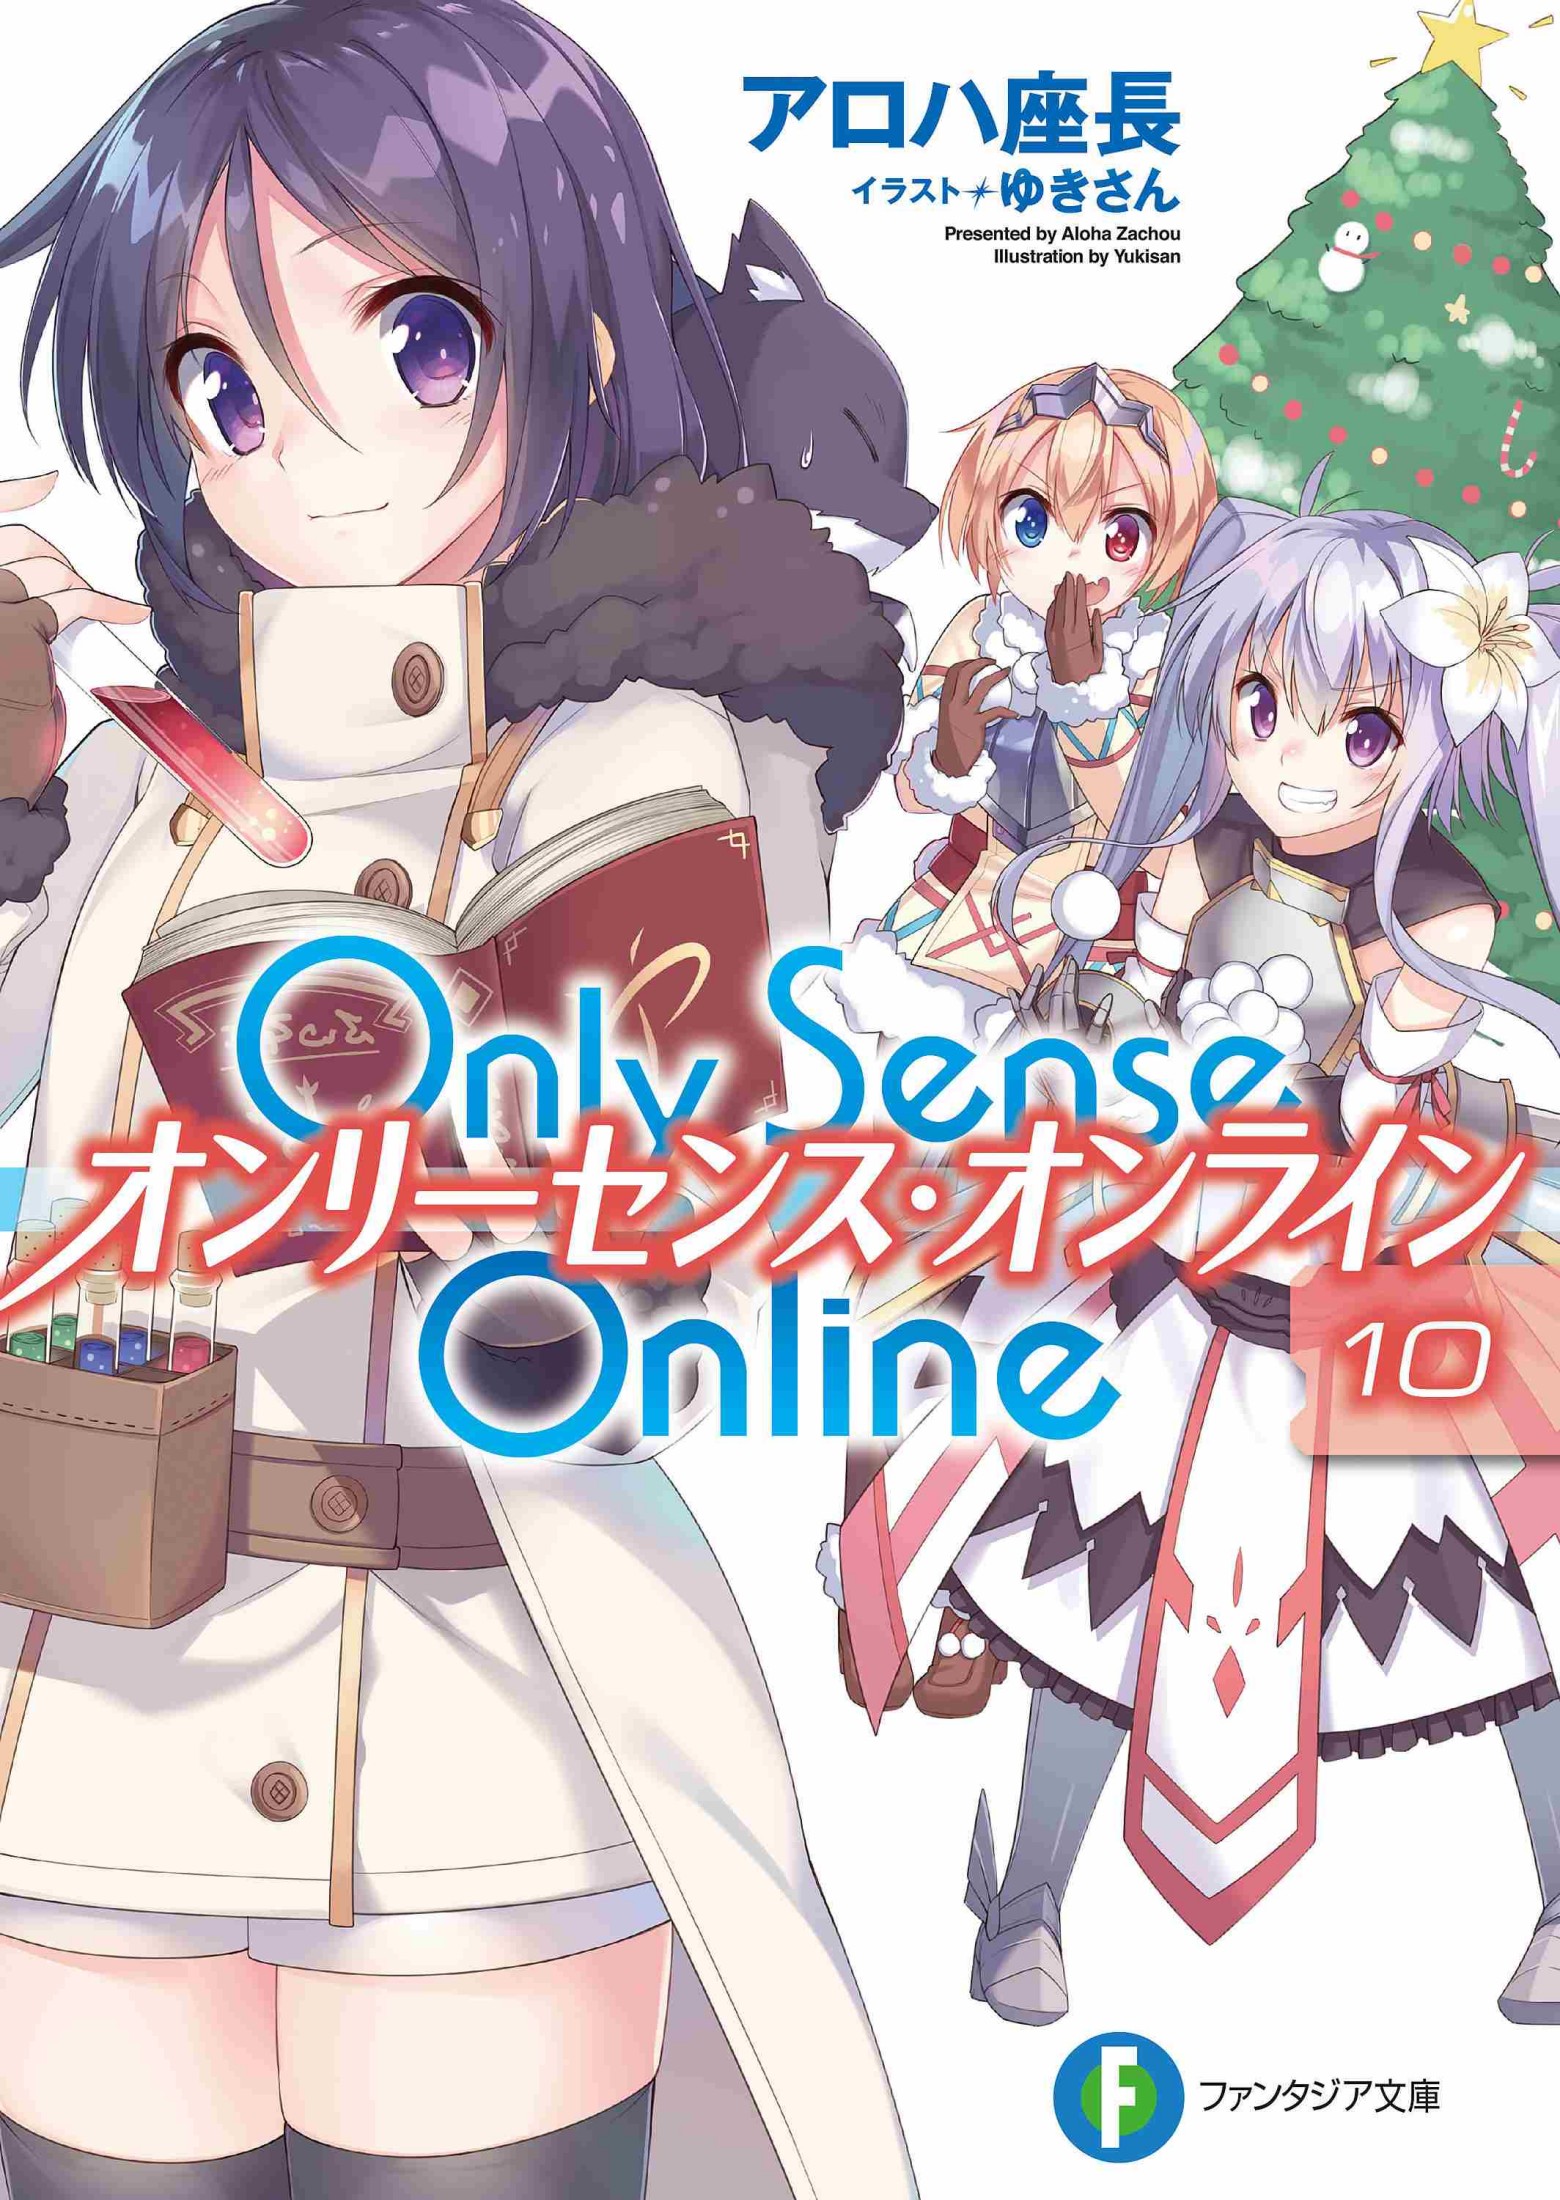 Only Sense Online #010